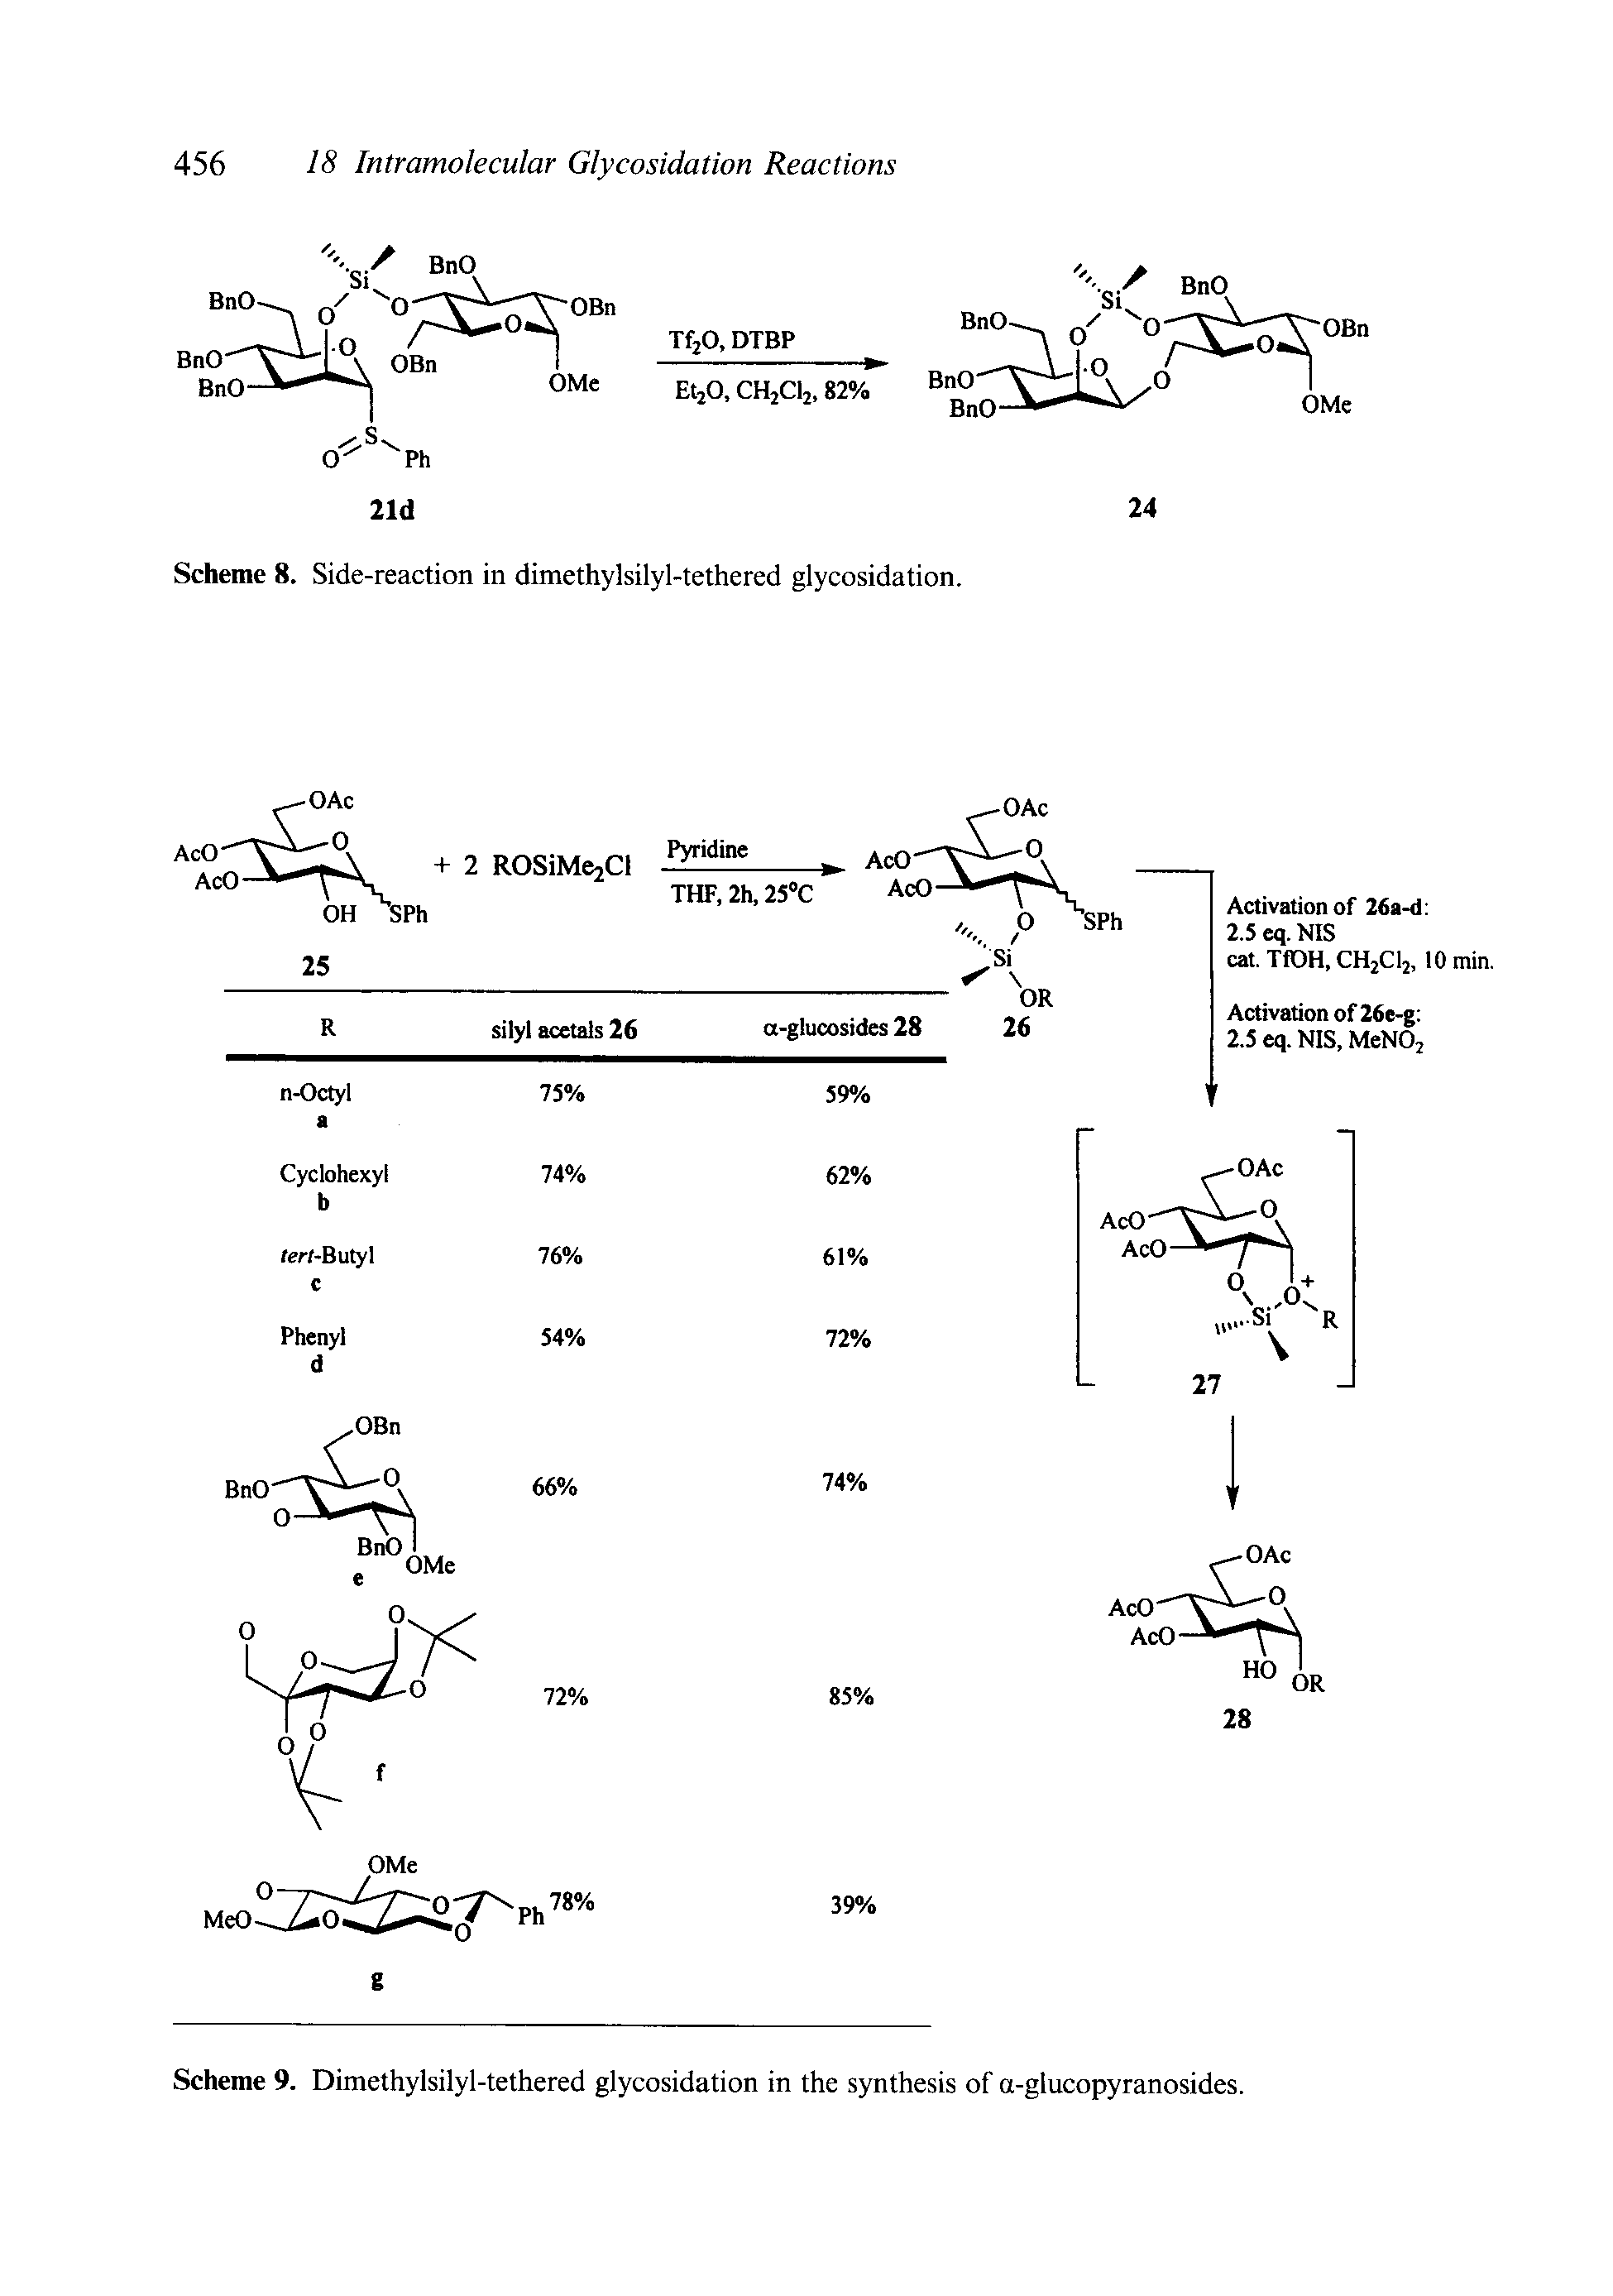 Scheme 8. Side-reaction in dimethylsilyl-tethered glycosidation.